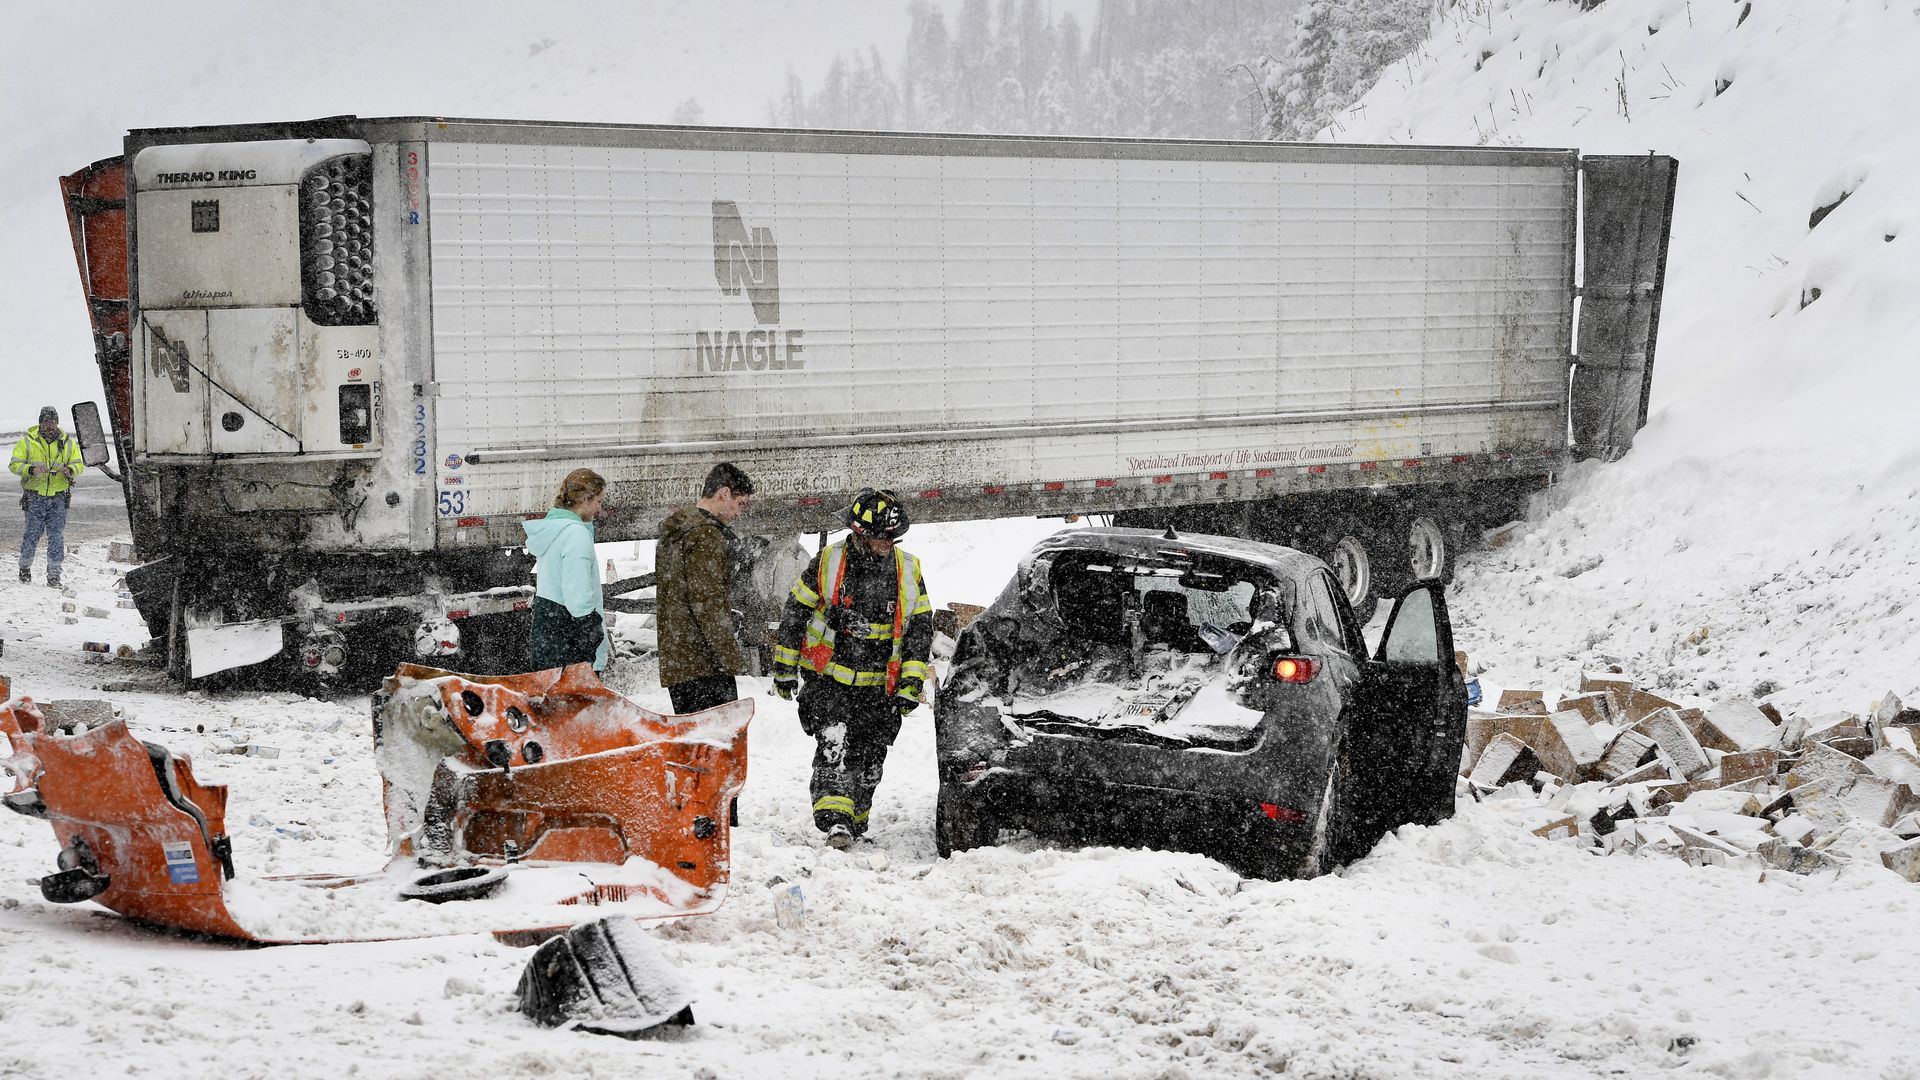 A crash on westbound Interstate 70 on March 3, 2019 in Silverthorne. Photo: Helen H. Richardson/Denver Post via Getty Images